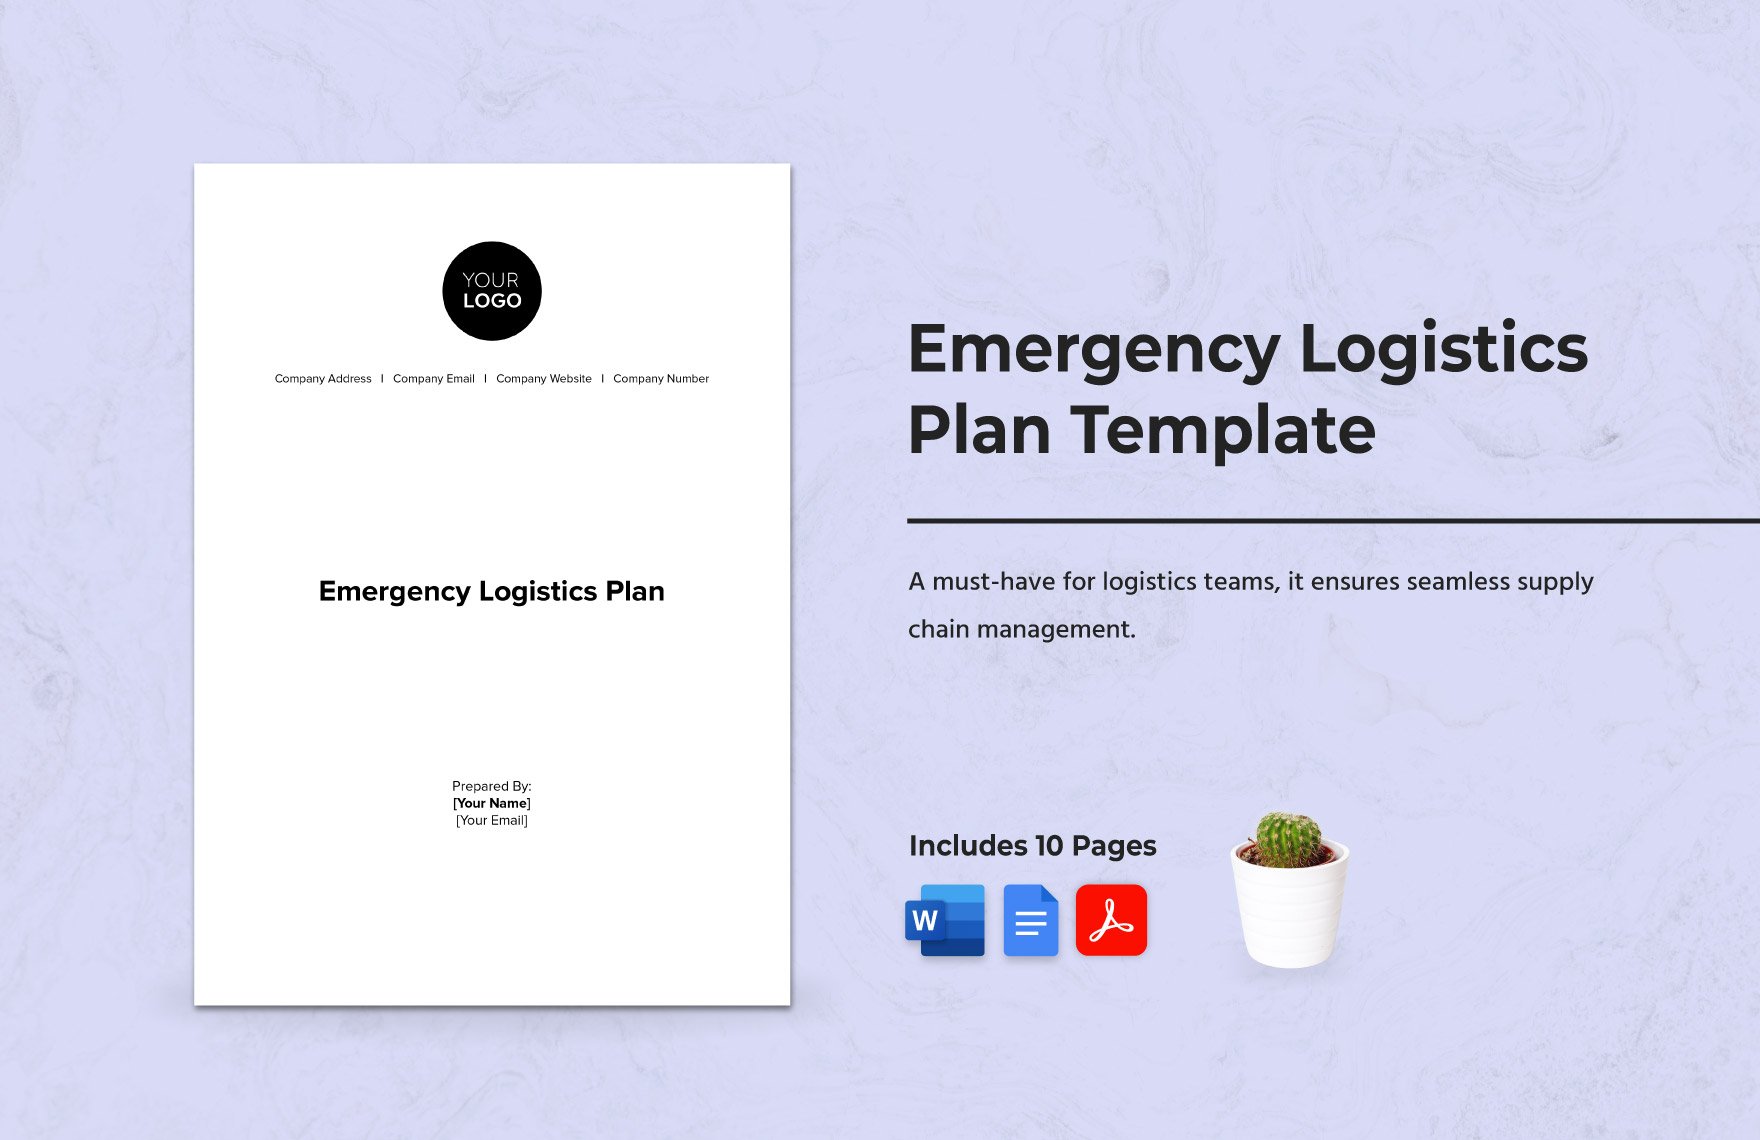 Emergency Logistics Plan Template in Word, Google Docs, PDF